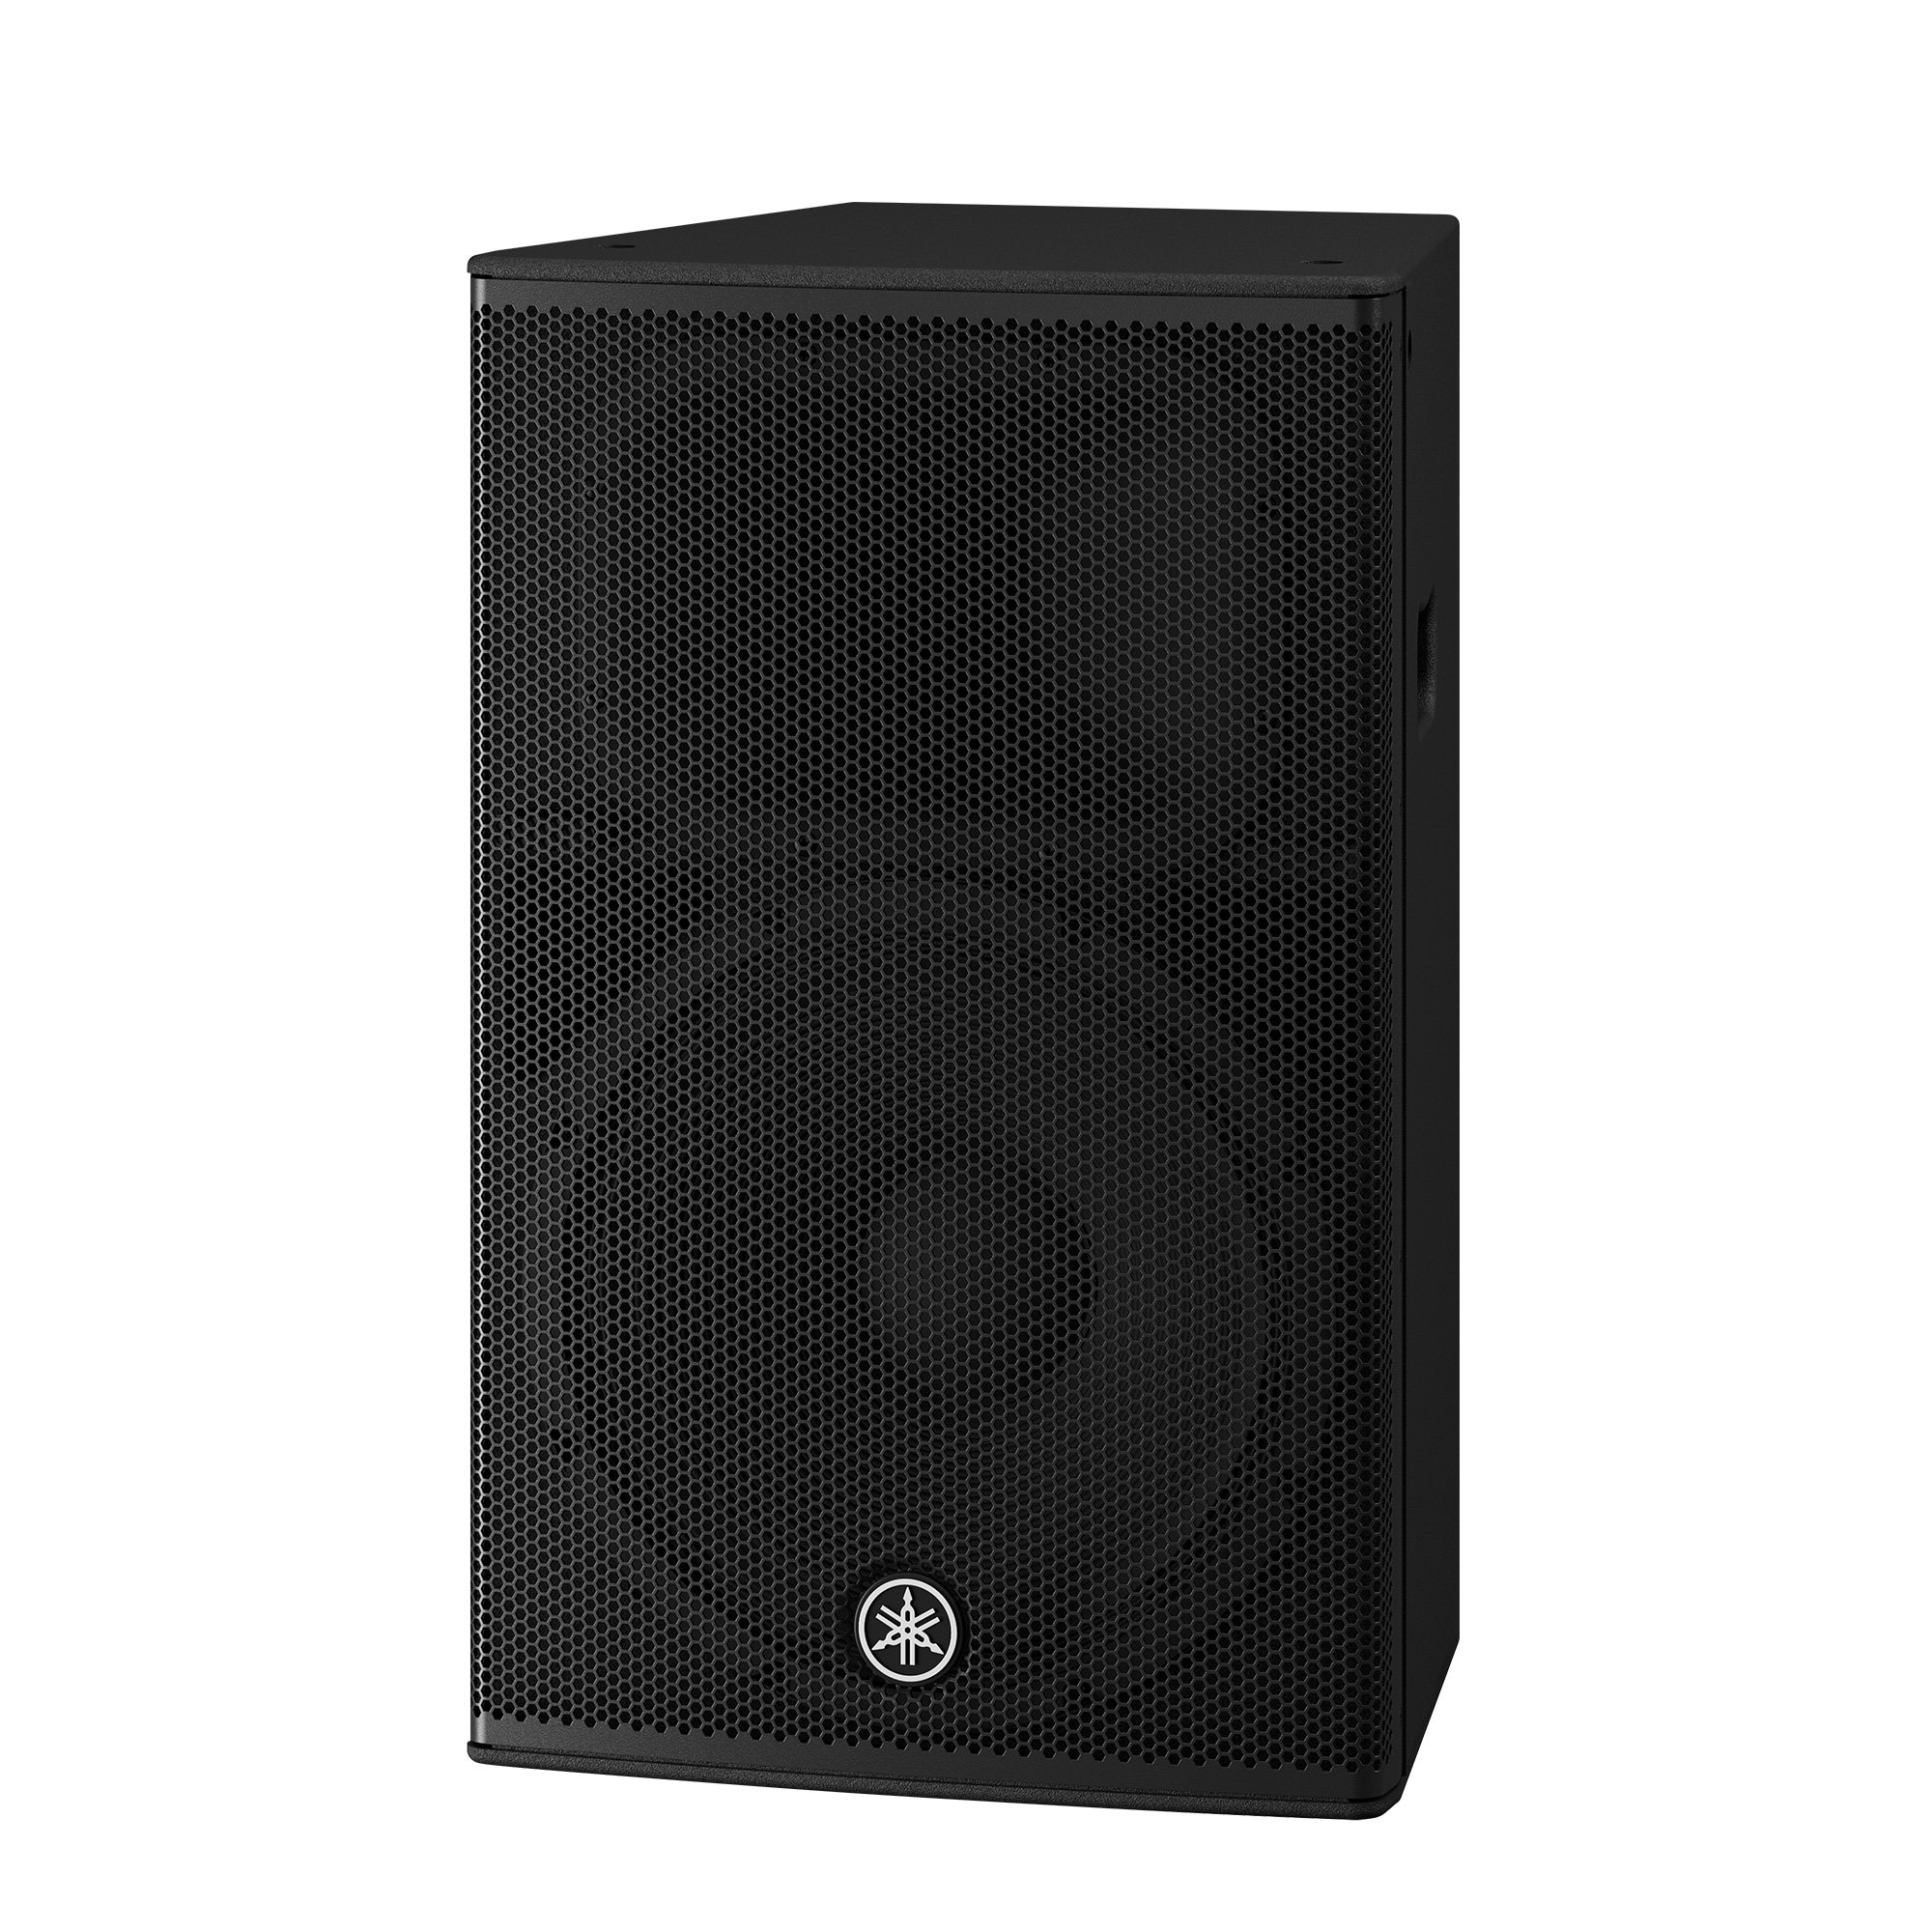 Serie DHR - Descripción - Altavoces - Audio profesional - Productos -  Yamaha - México